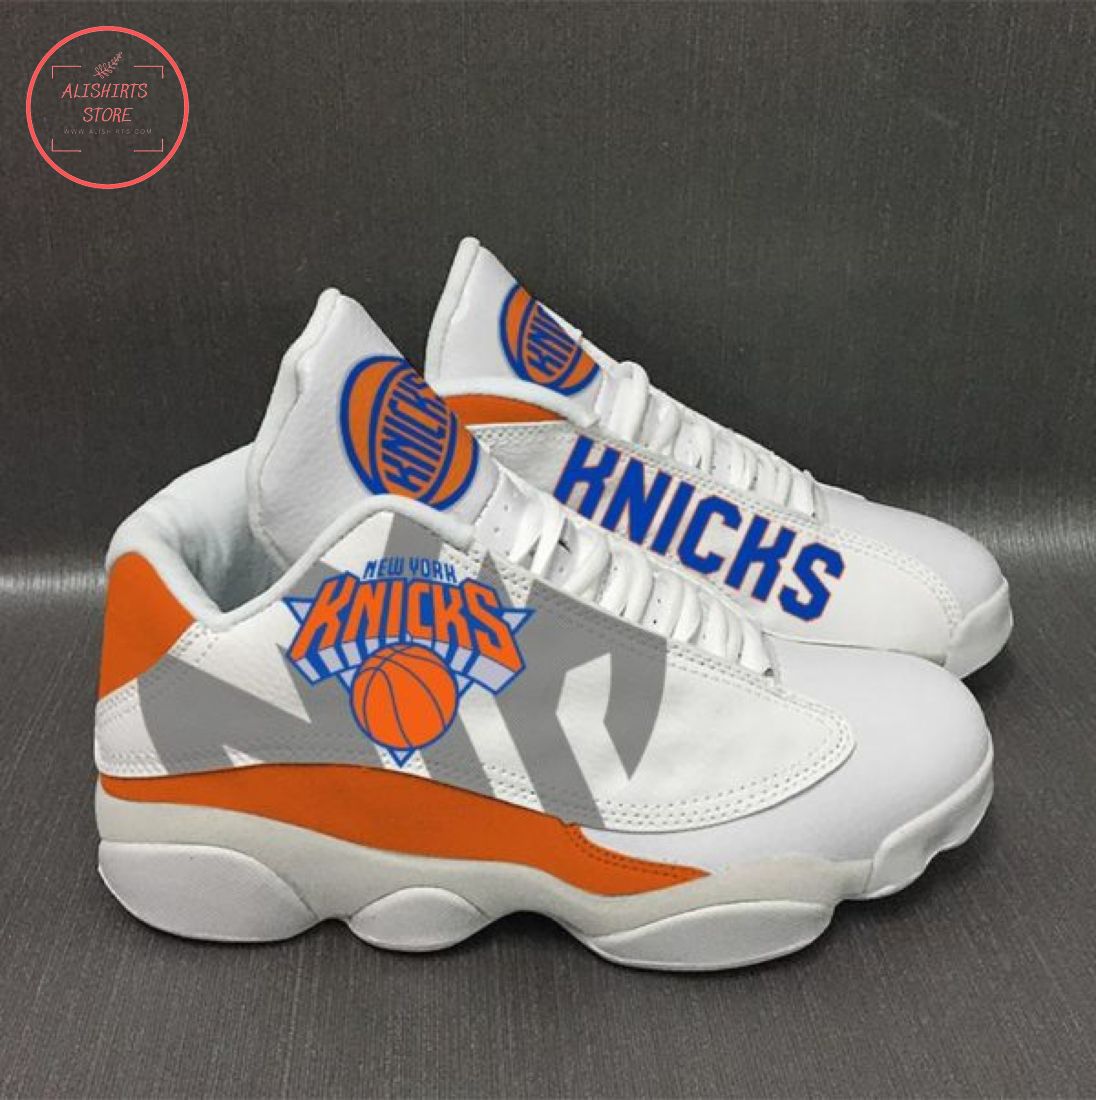 NBA New York Knicks Air Jordan 13 Sneakers Shoes